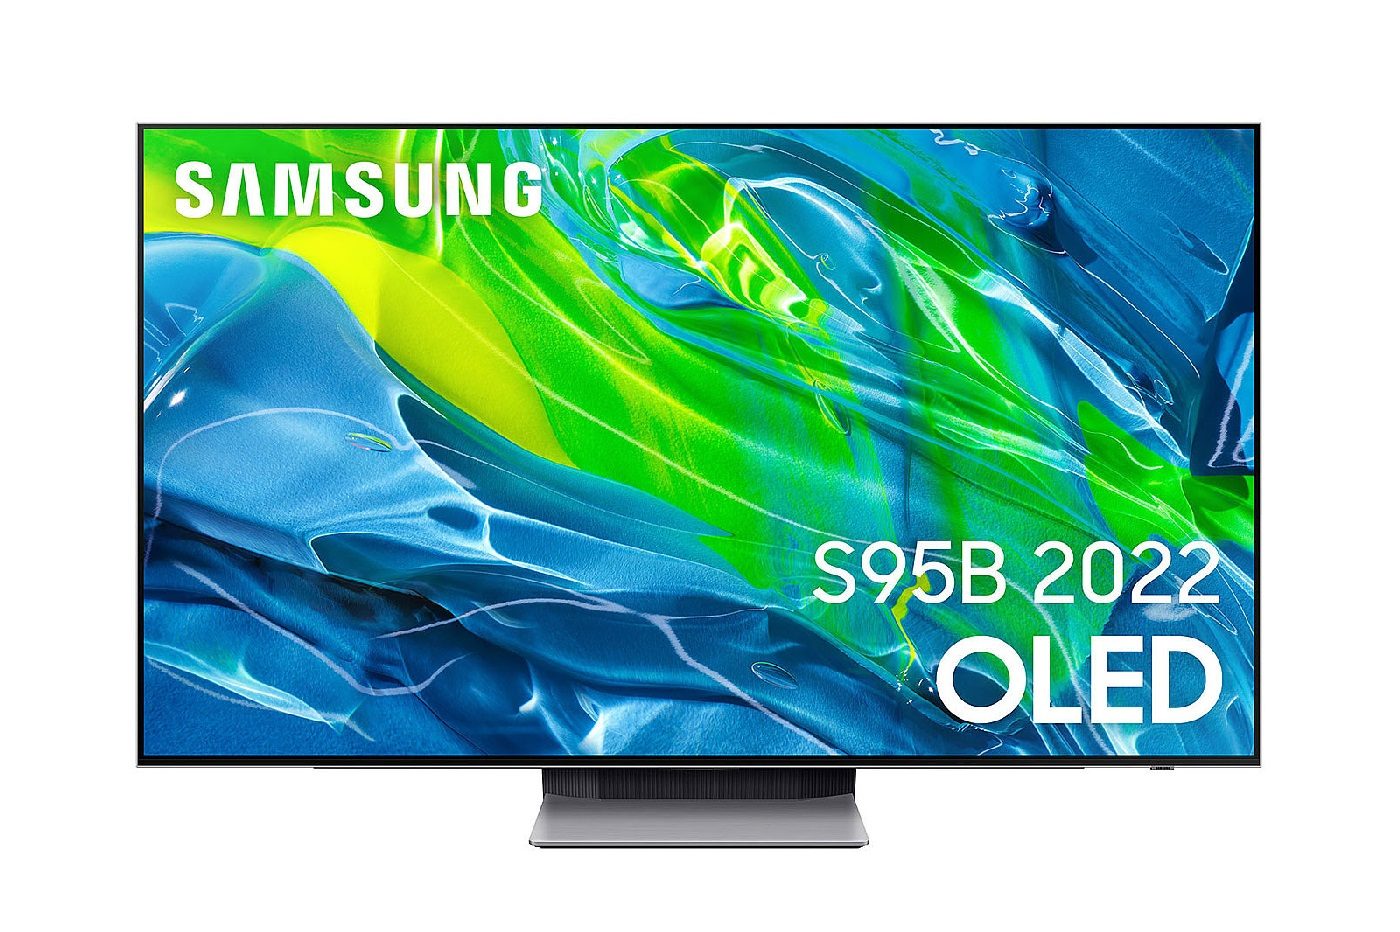 Samsung OLED 55S95B 2022